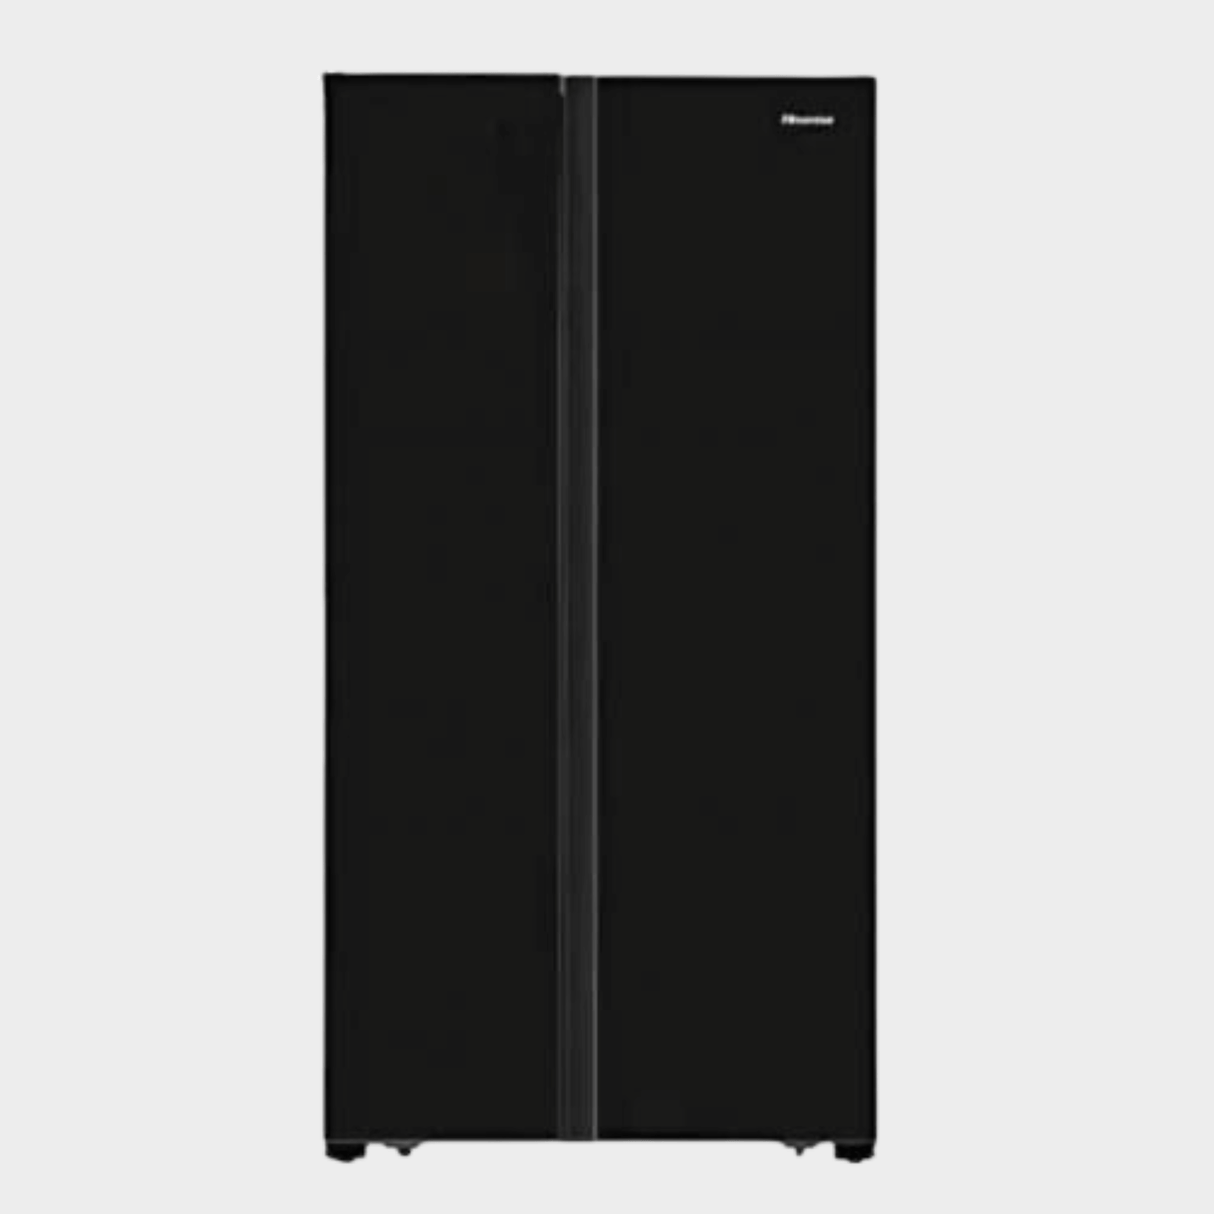 Hisense 560L Fridge, Side By Side Door Frost Free Refrigerator RC-56WS4S2 – Black